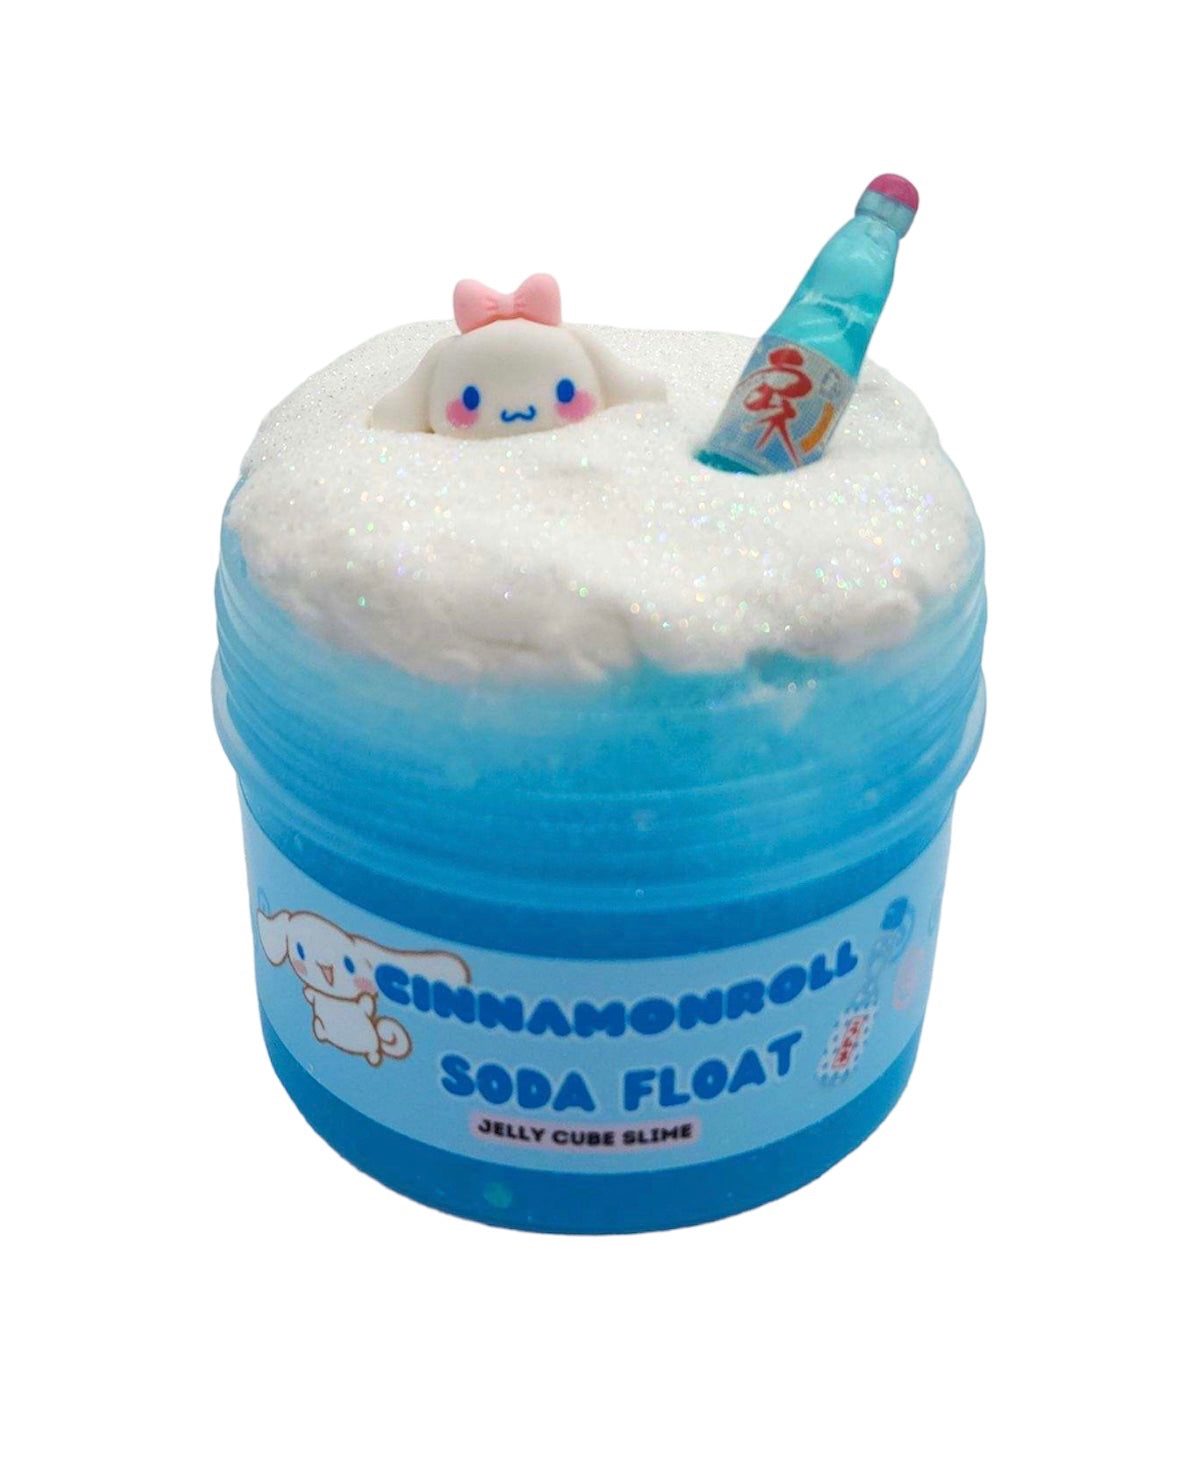 Cinnamonroll Soda Float